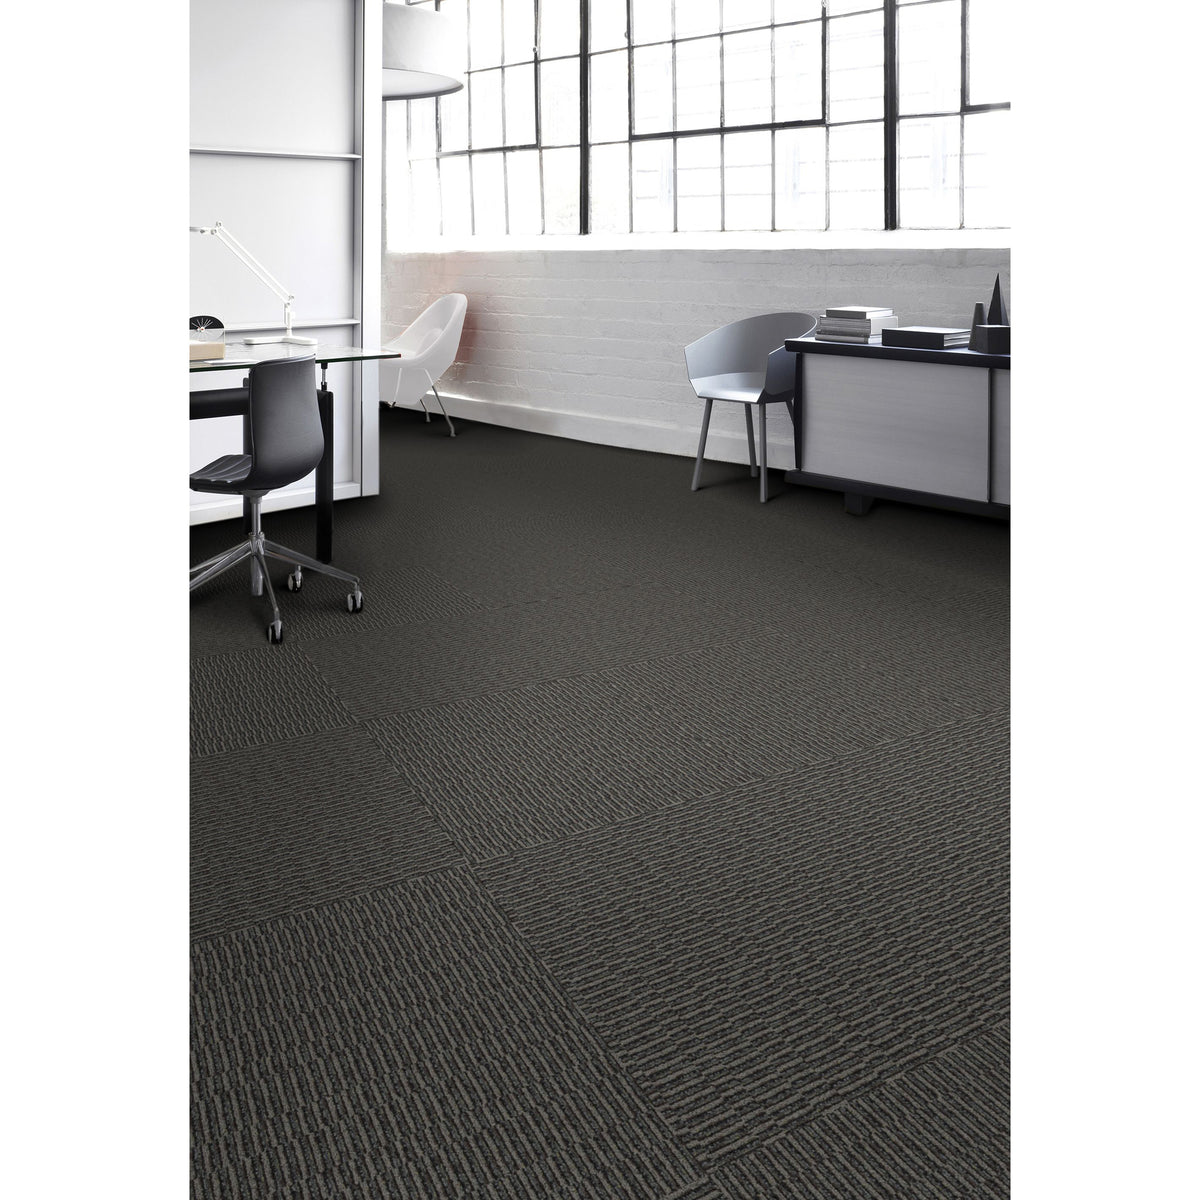 Aladdin Commercial - Define Collection - Compel - Commercial Carpet Tile - Specify